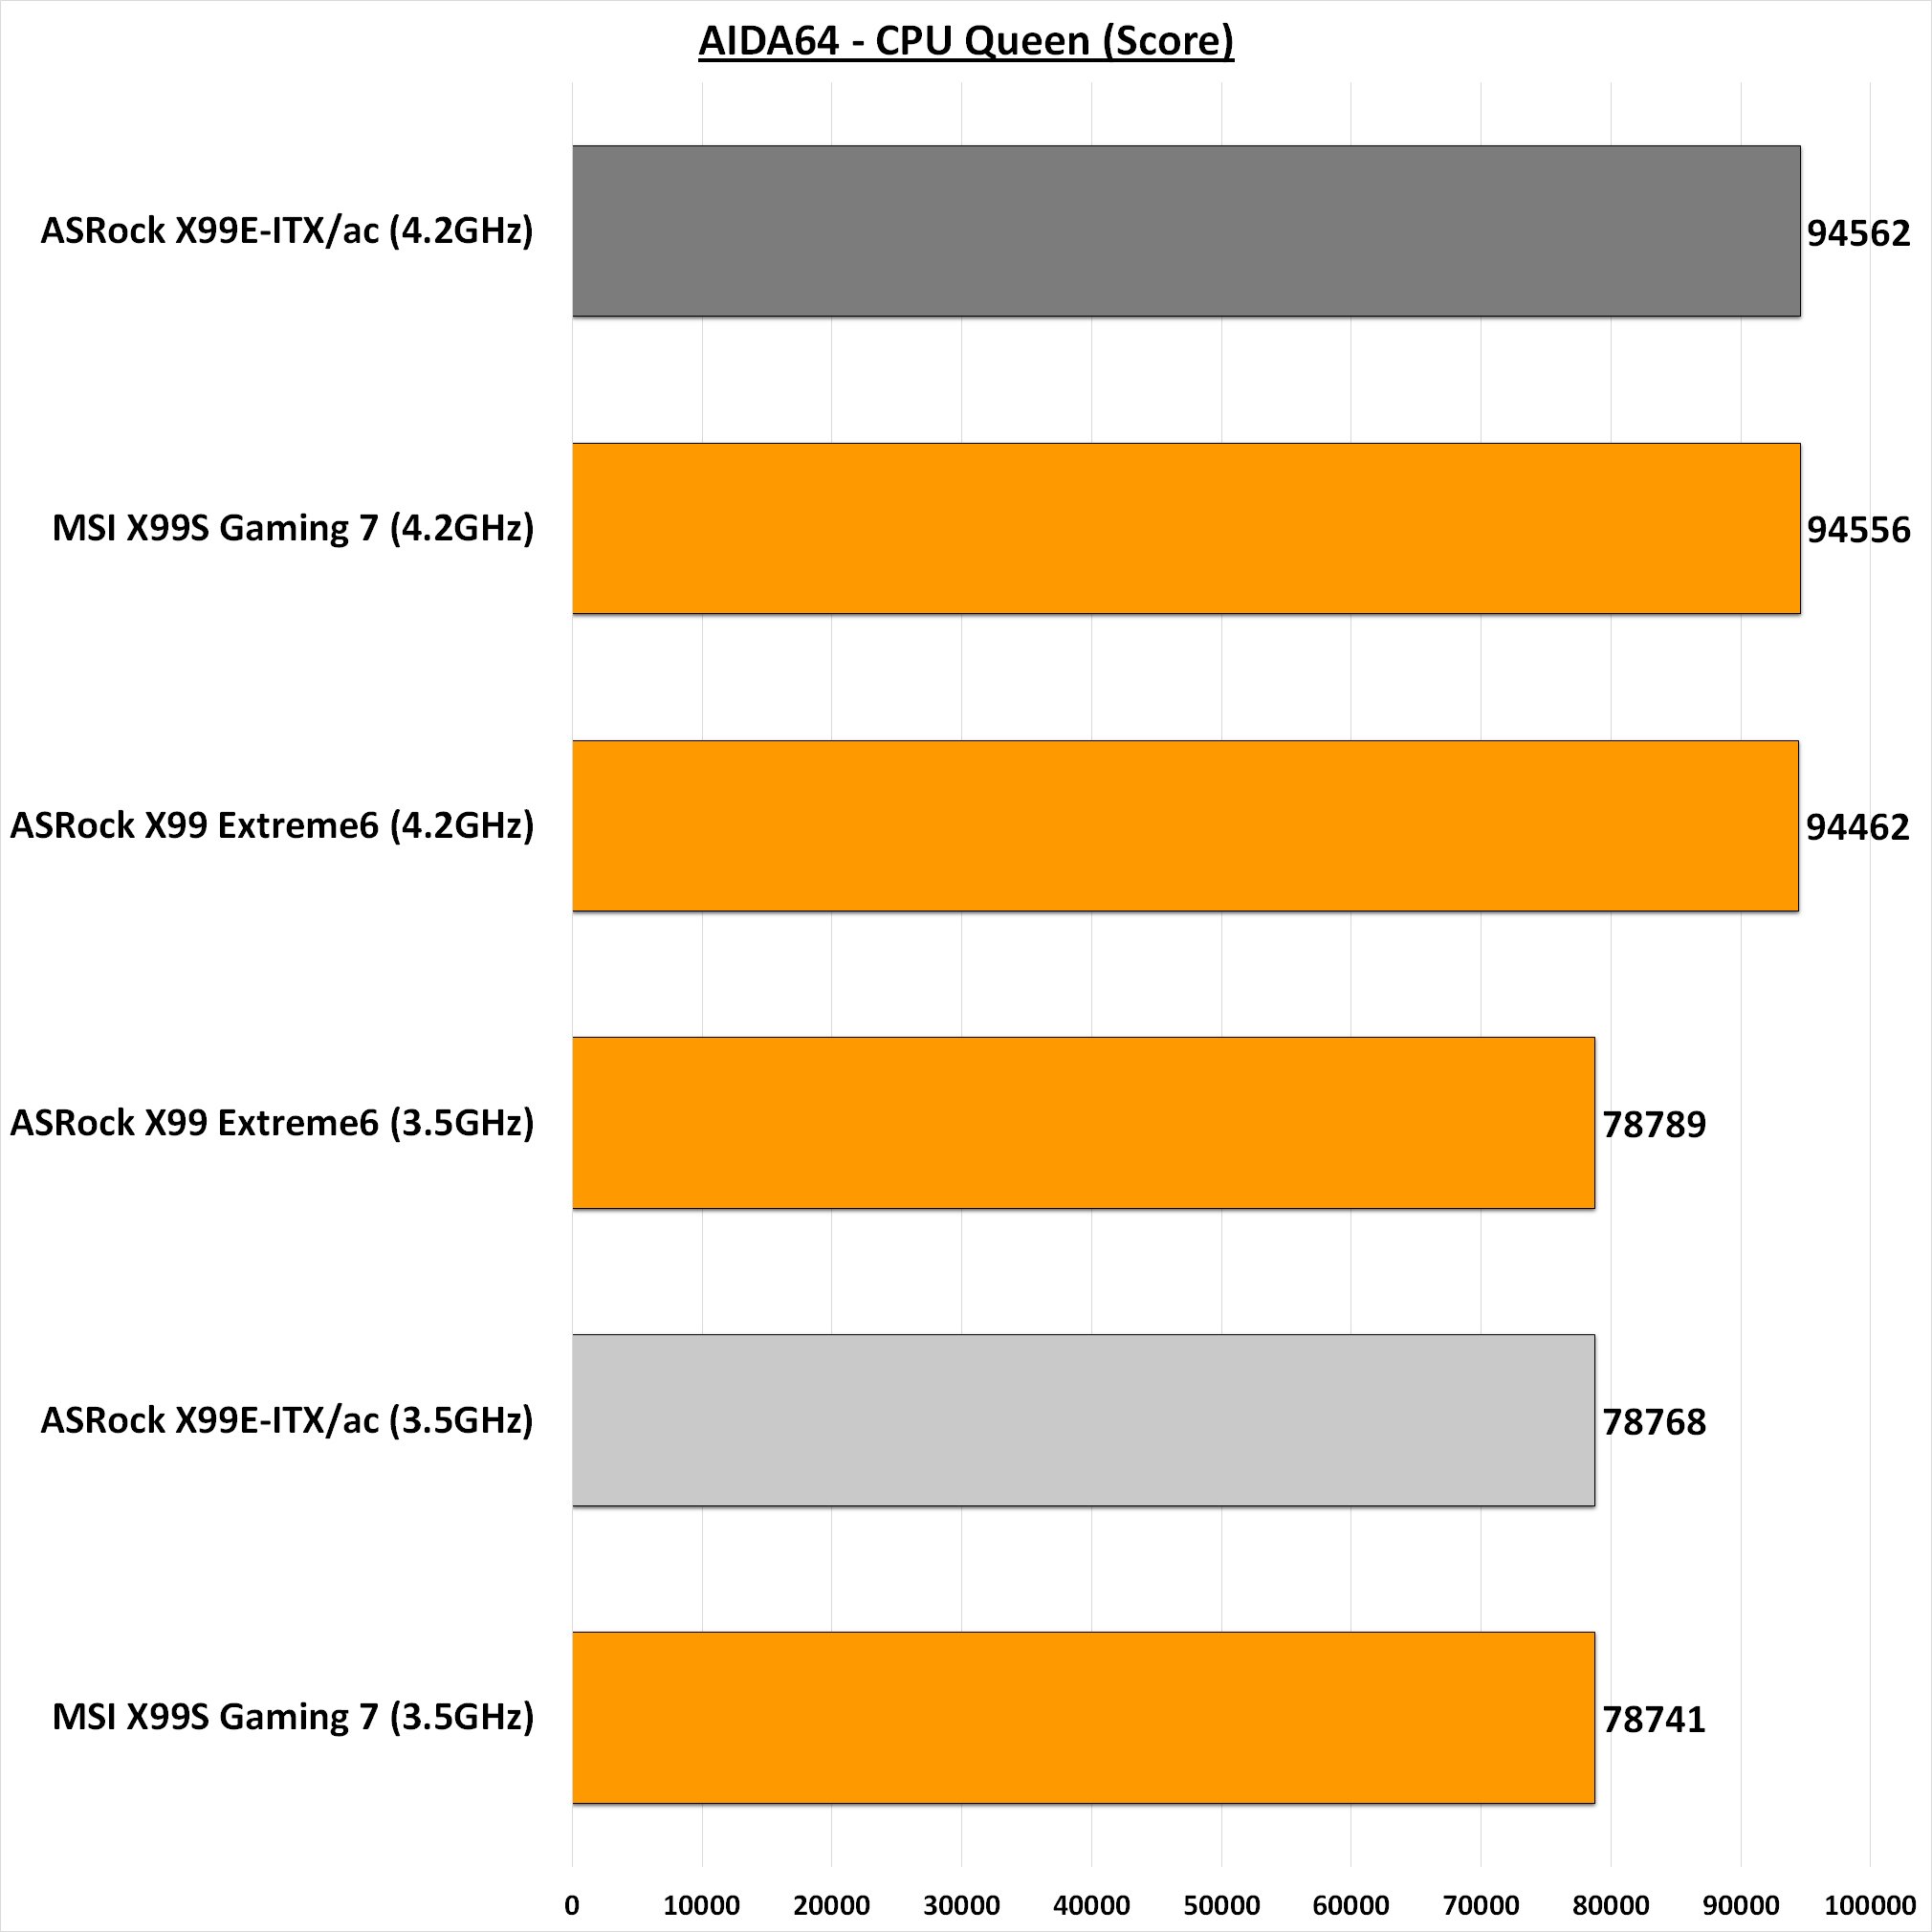 ASRock X99E-ITX/ac Mini-ITX Motherboard Review 23